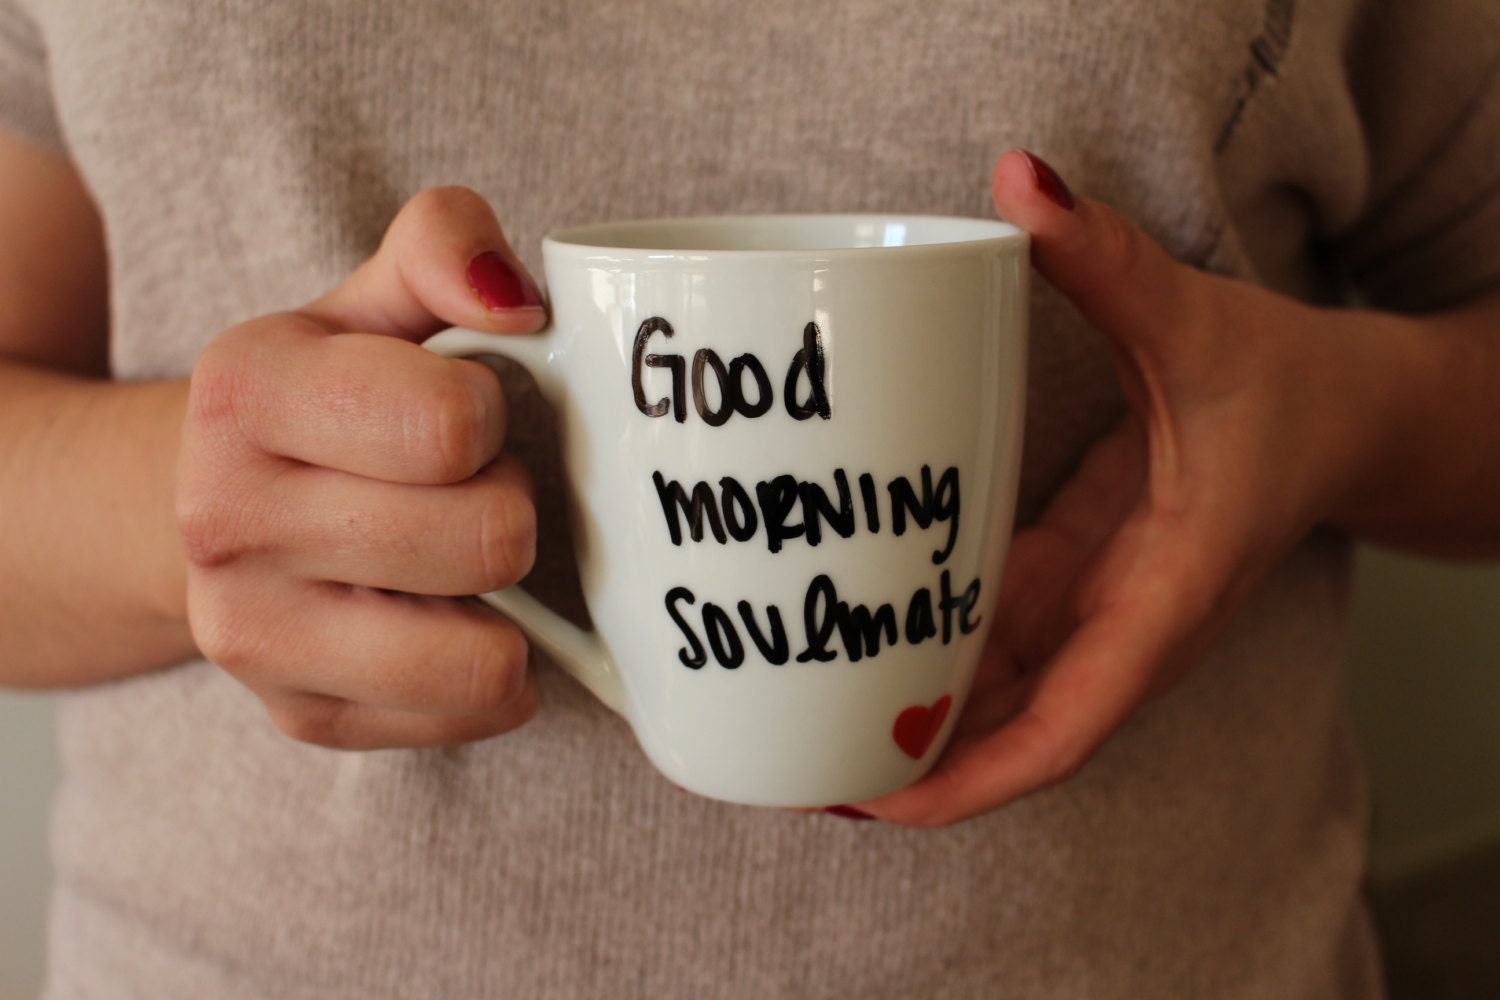 Good Morning Soulmate mug